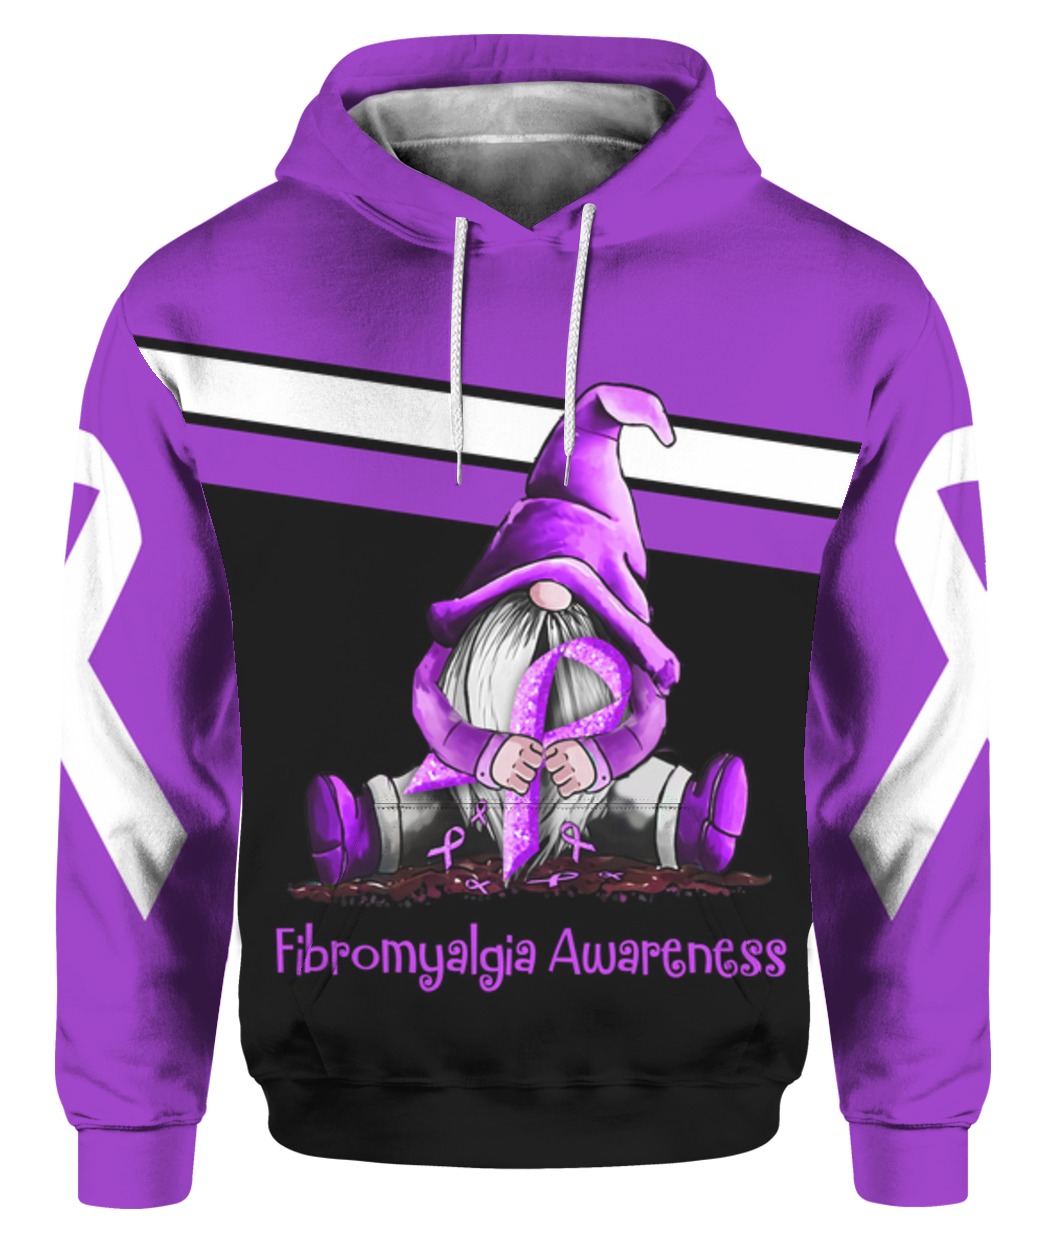 Fibromyalgia Awareness Gnome 3d hoodie, shirt and sweatshirt